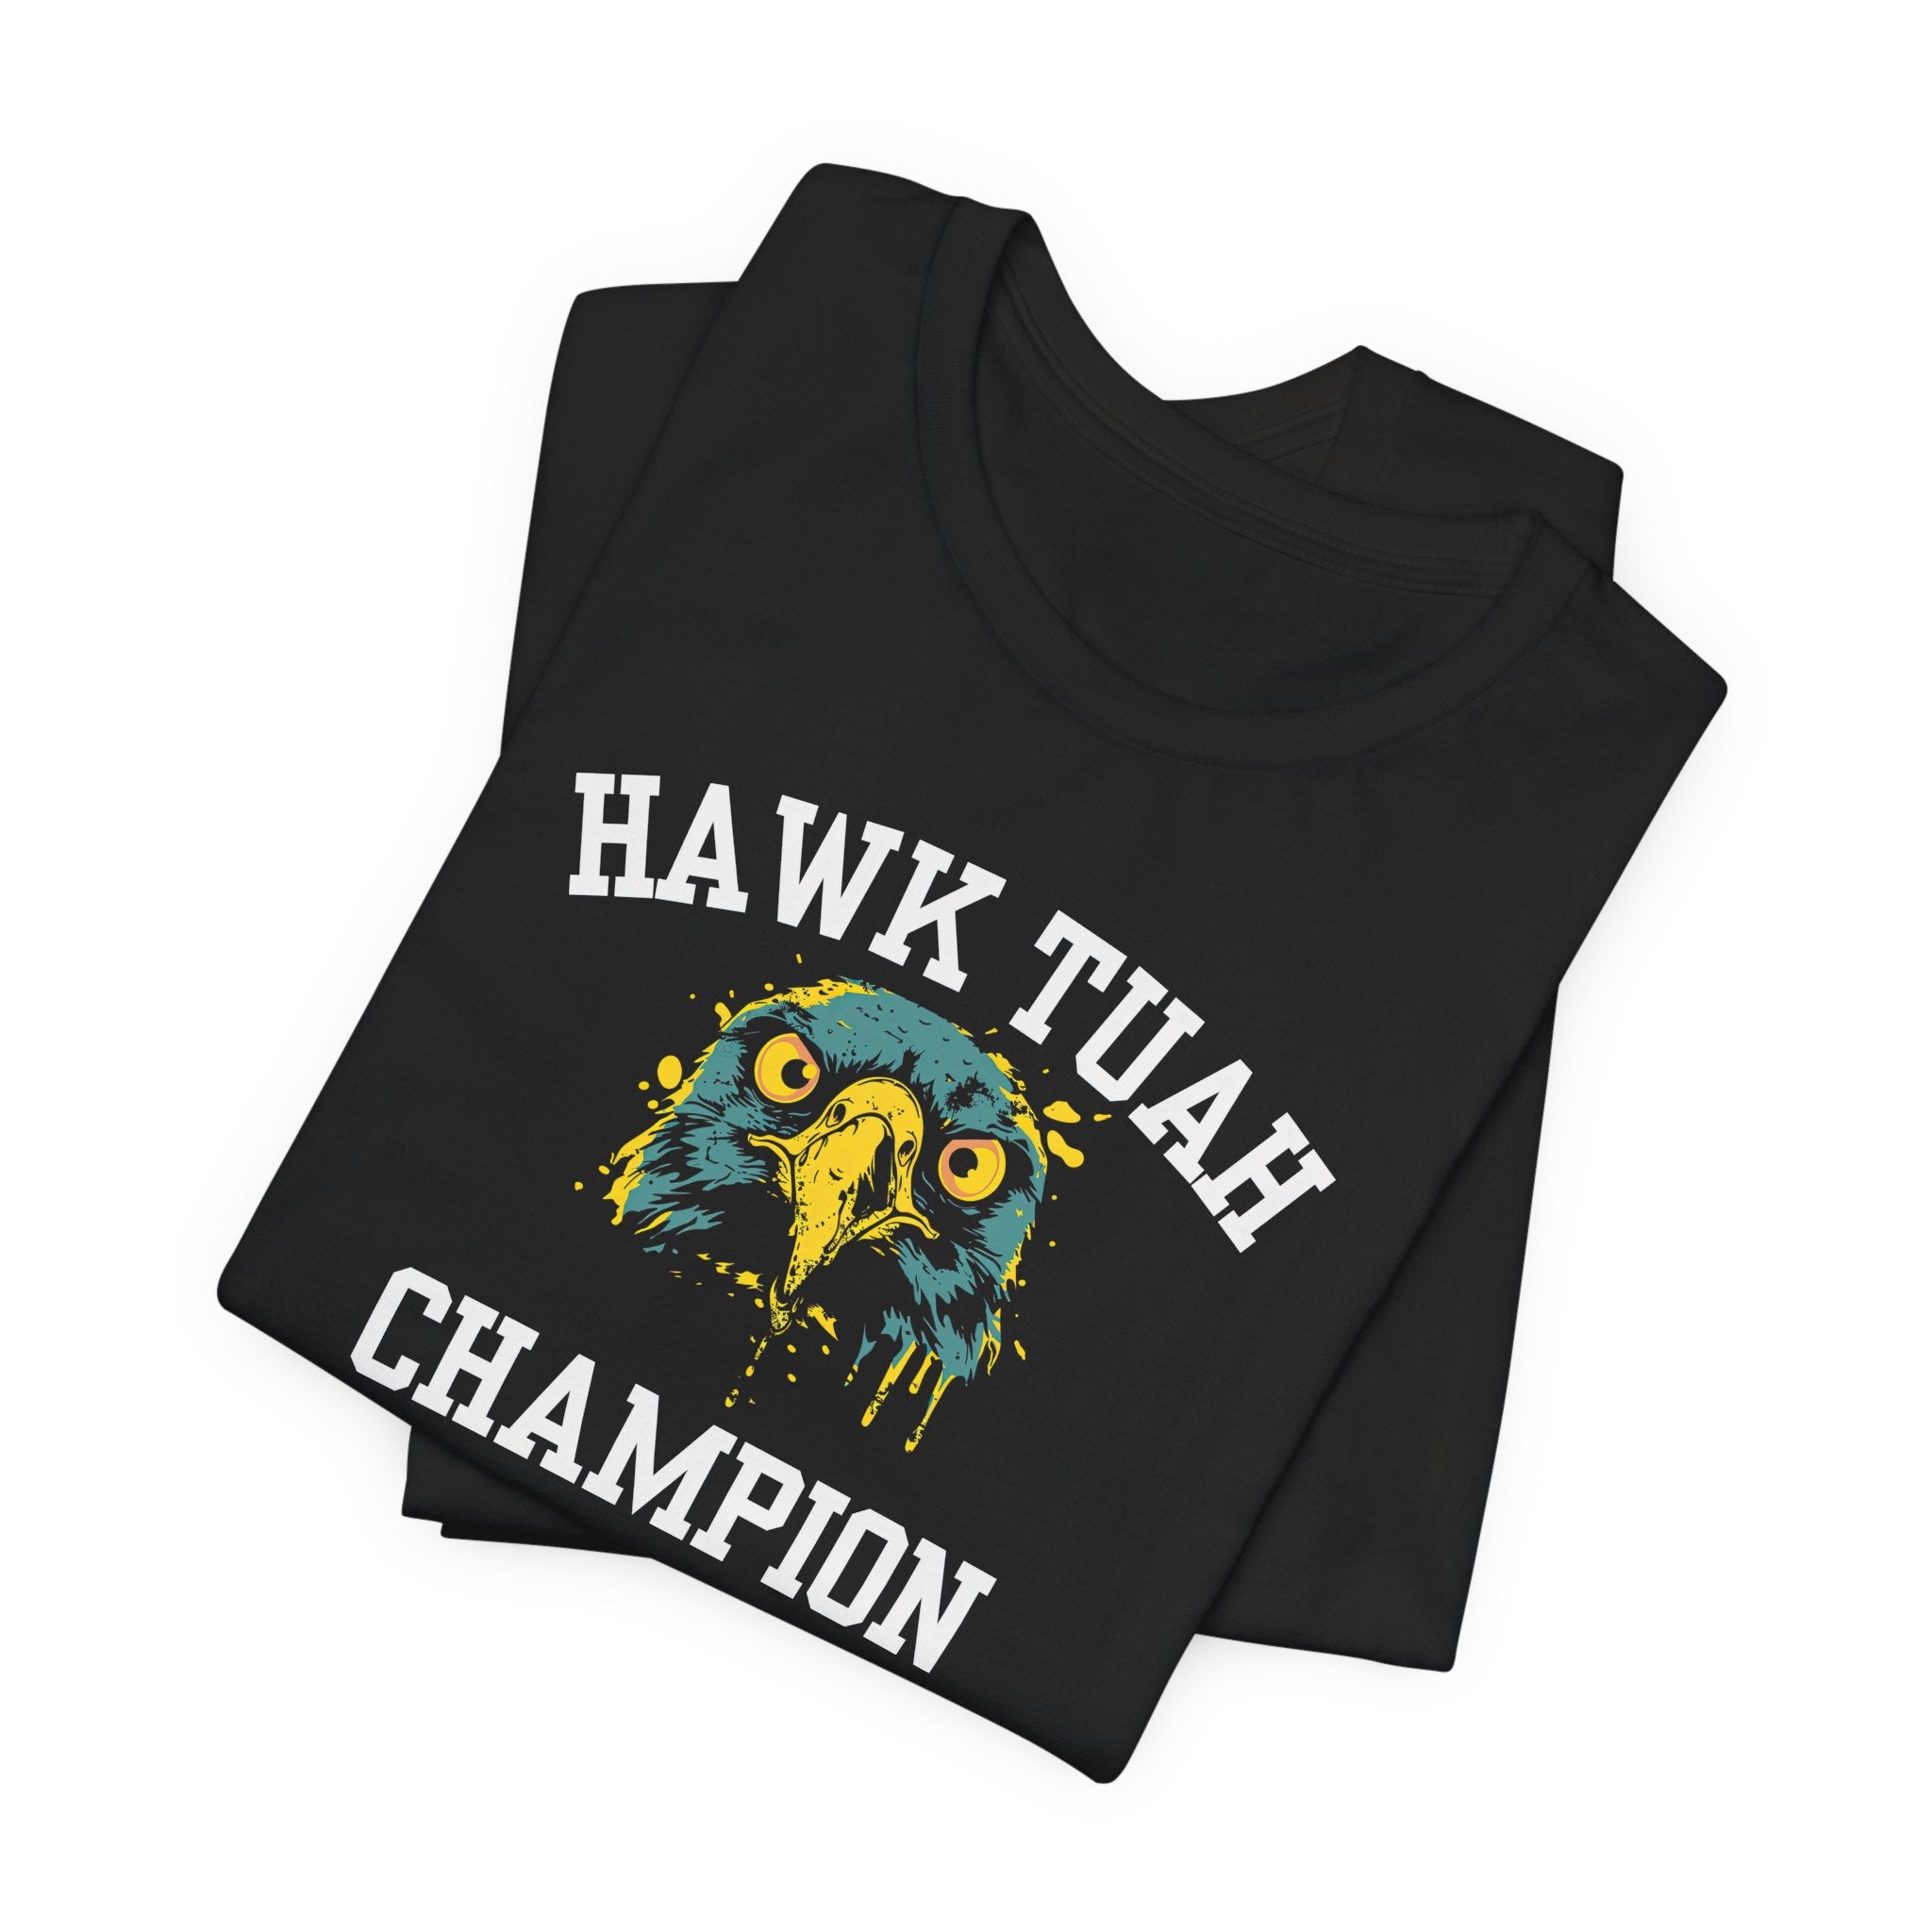 Hawk Tuah Champion T-Shirt